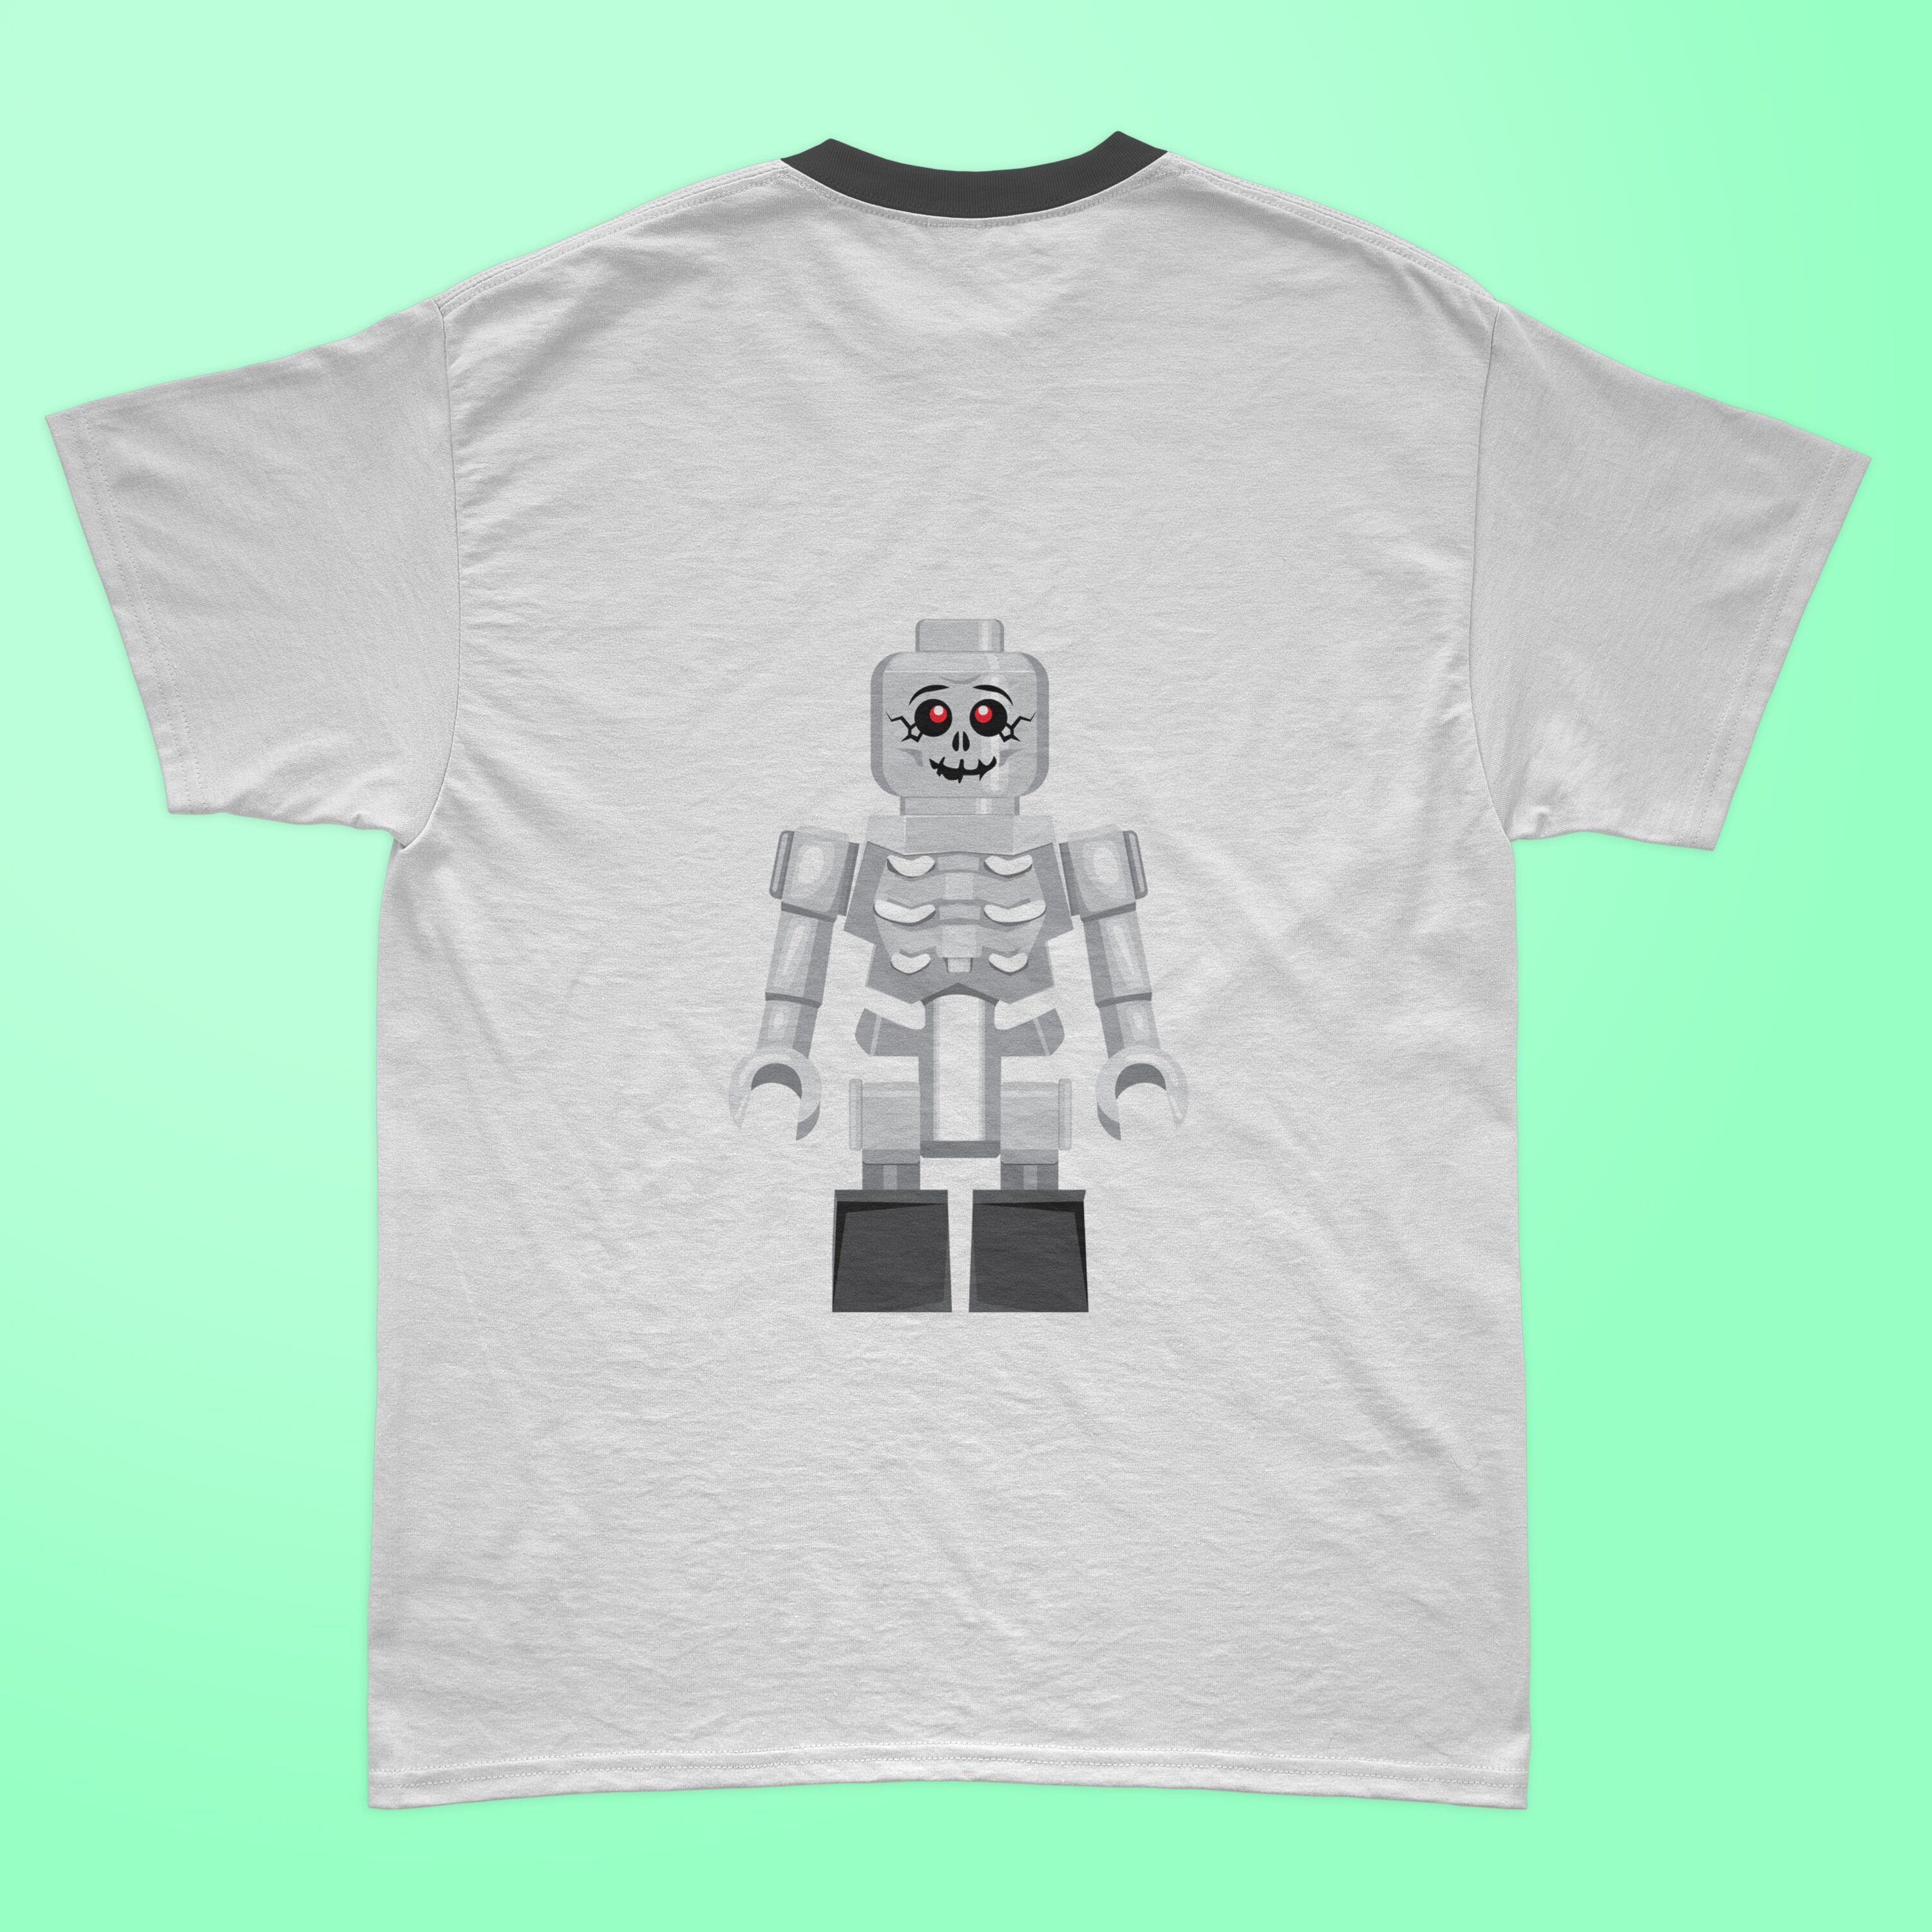 Lego skeleton illustration on the t-shirt.